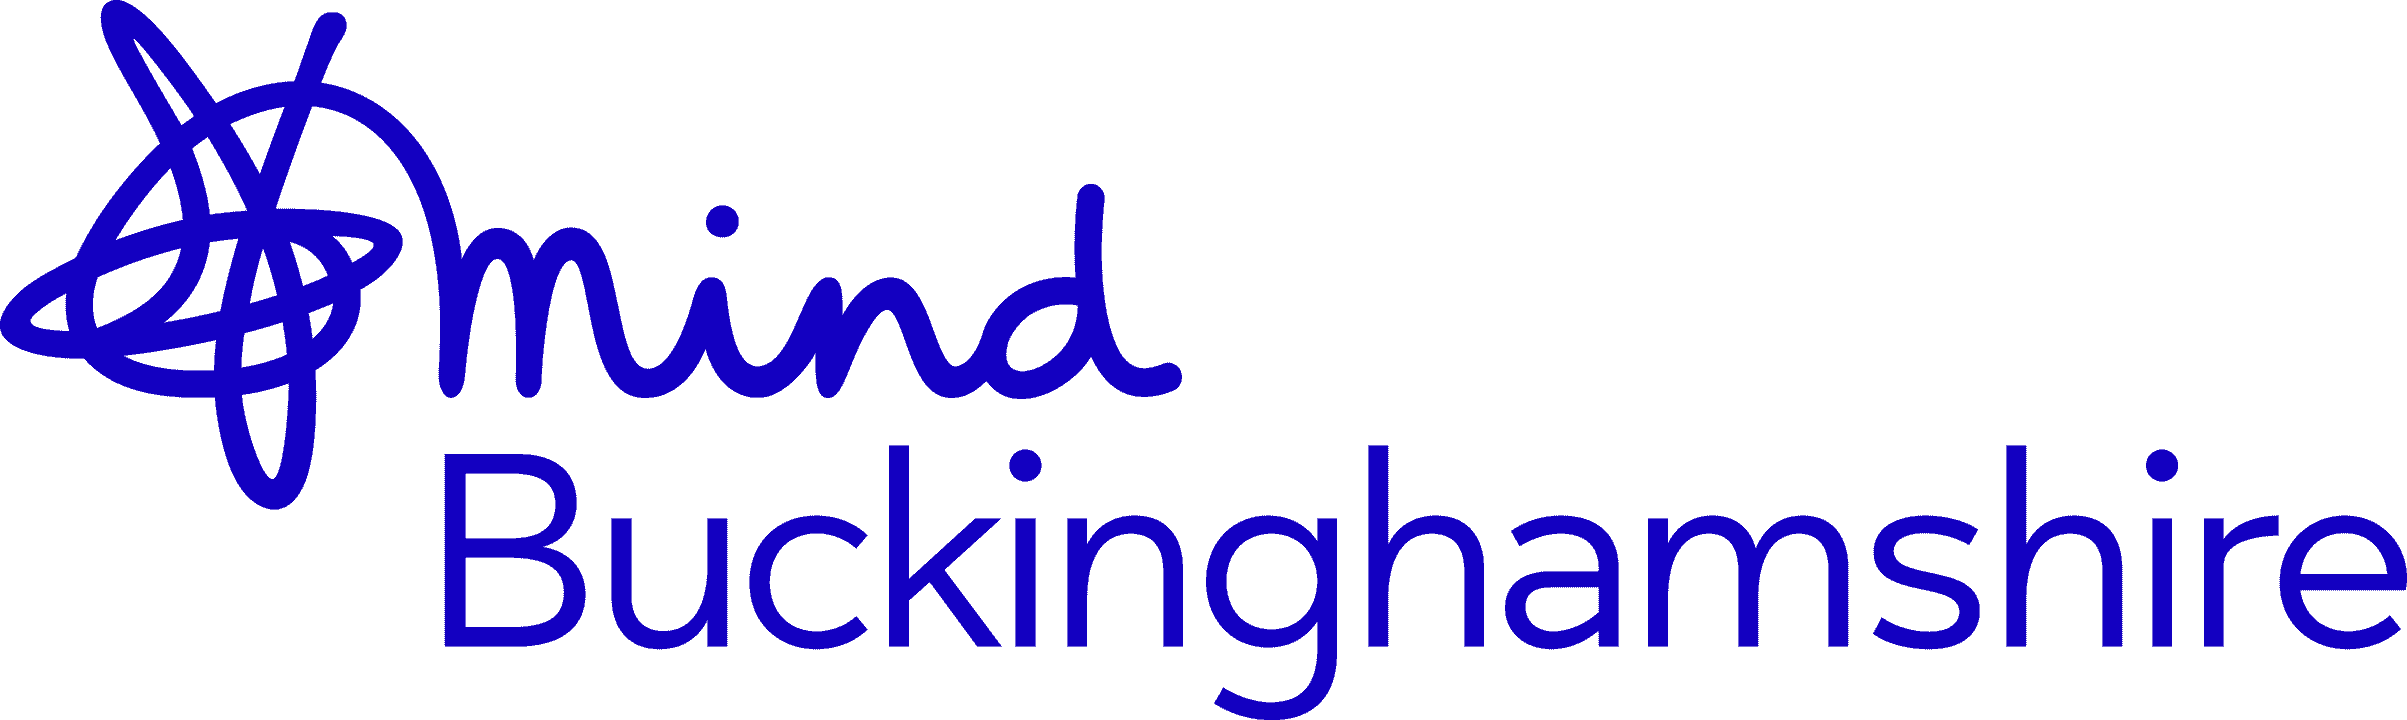 https://ef7reu2nmnd.exactdn.com/wp-content/uploads/2021/09/Buckinghamshire_Mind_Logo_stacked_RGB.png?strip=all&lossy=1&w=1400&ssl=1